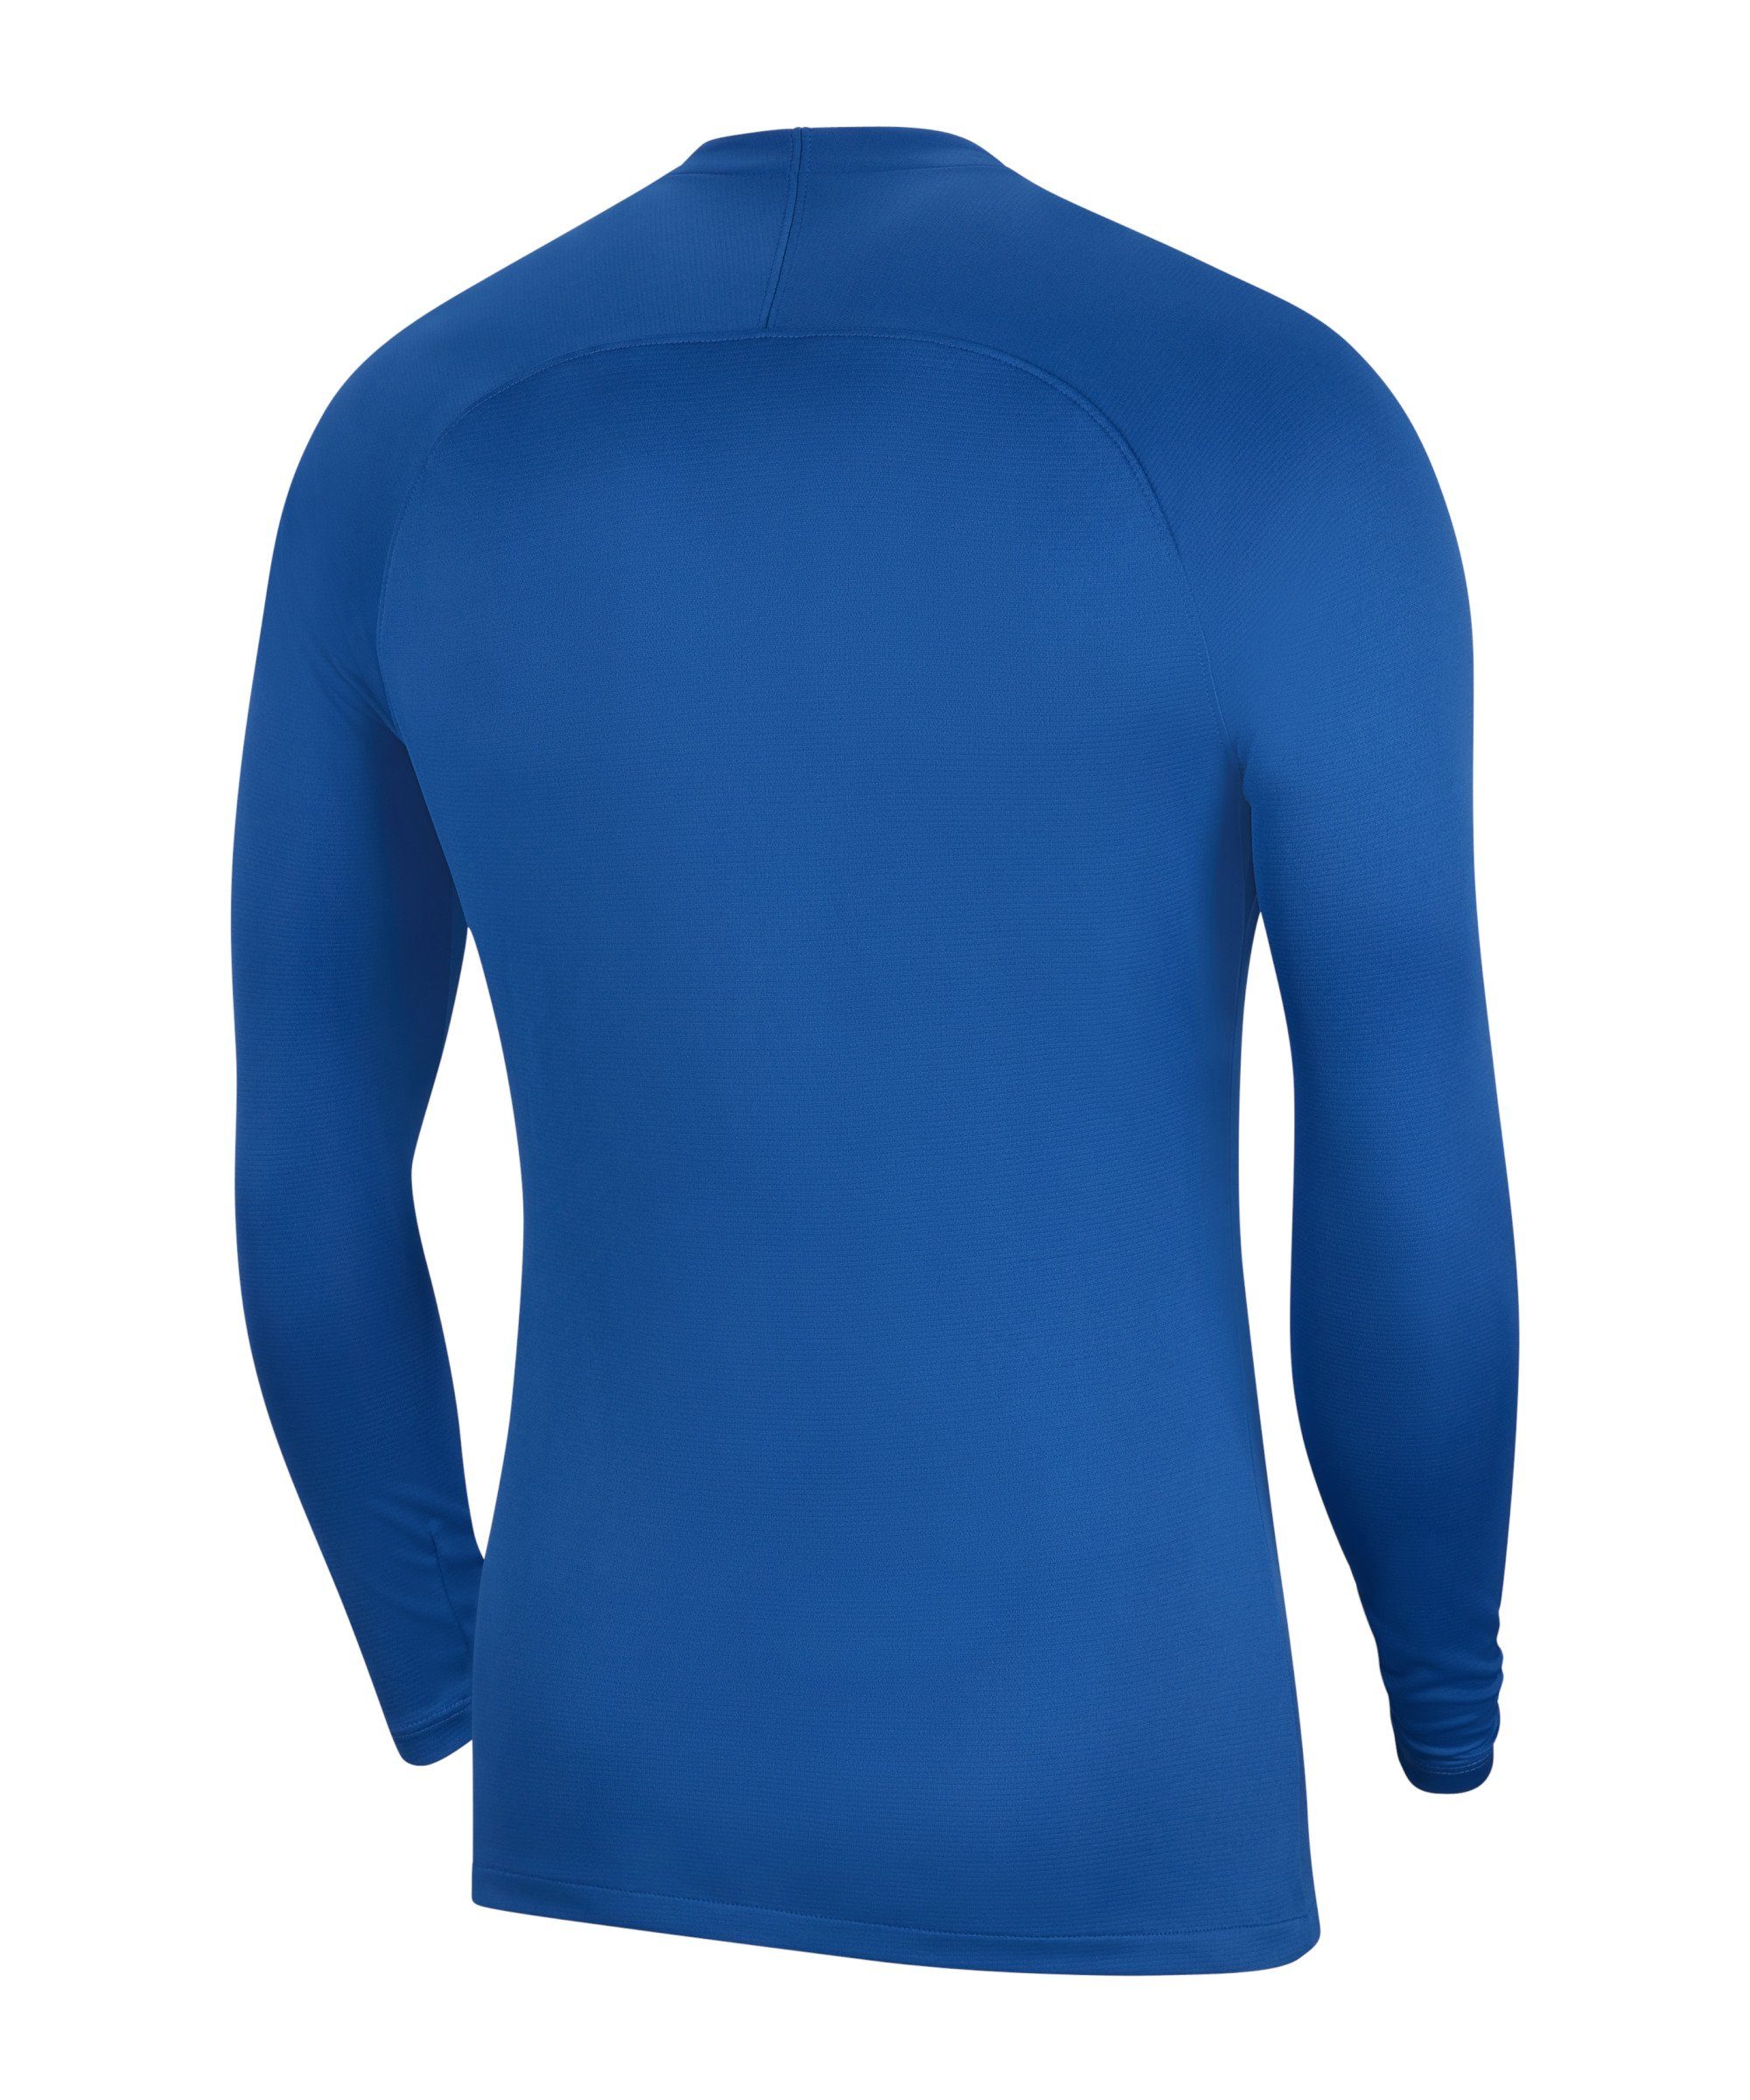 Nike Funktionsshirt blauweiss Park Daumenöffnung Layer First Langarmshirt